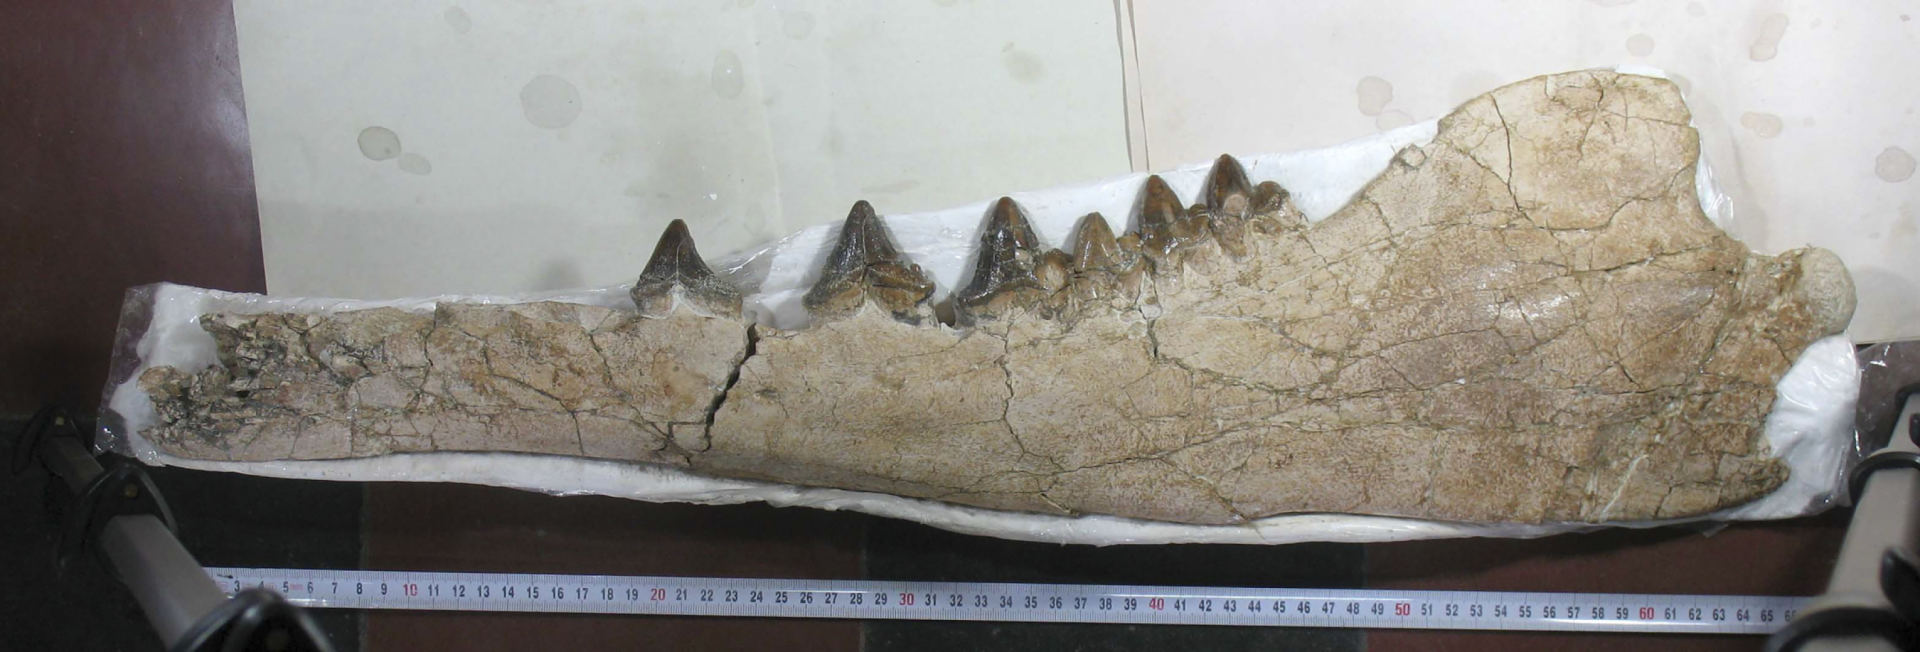 Firebenet forhistorisk hvalfossil med svømmehudsfødder fundet i Peru 2